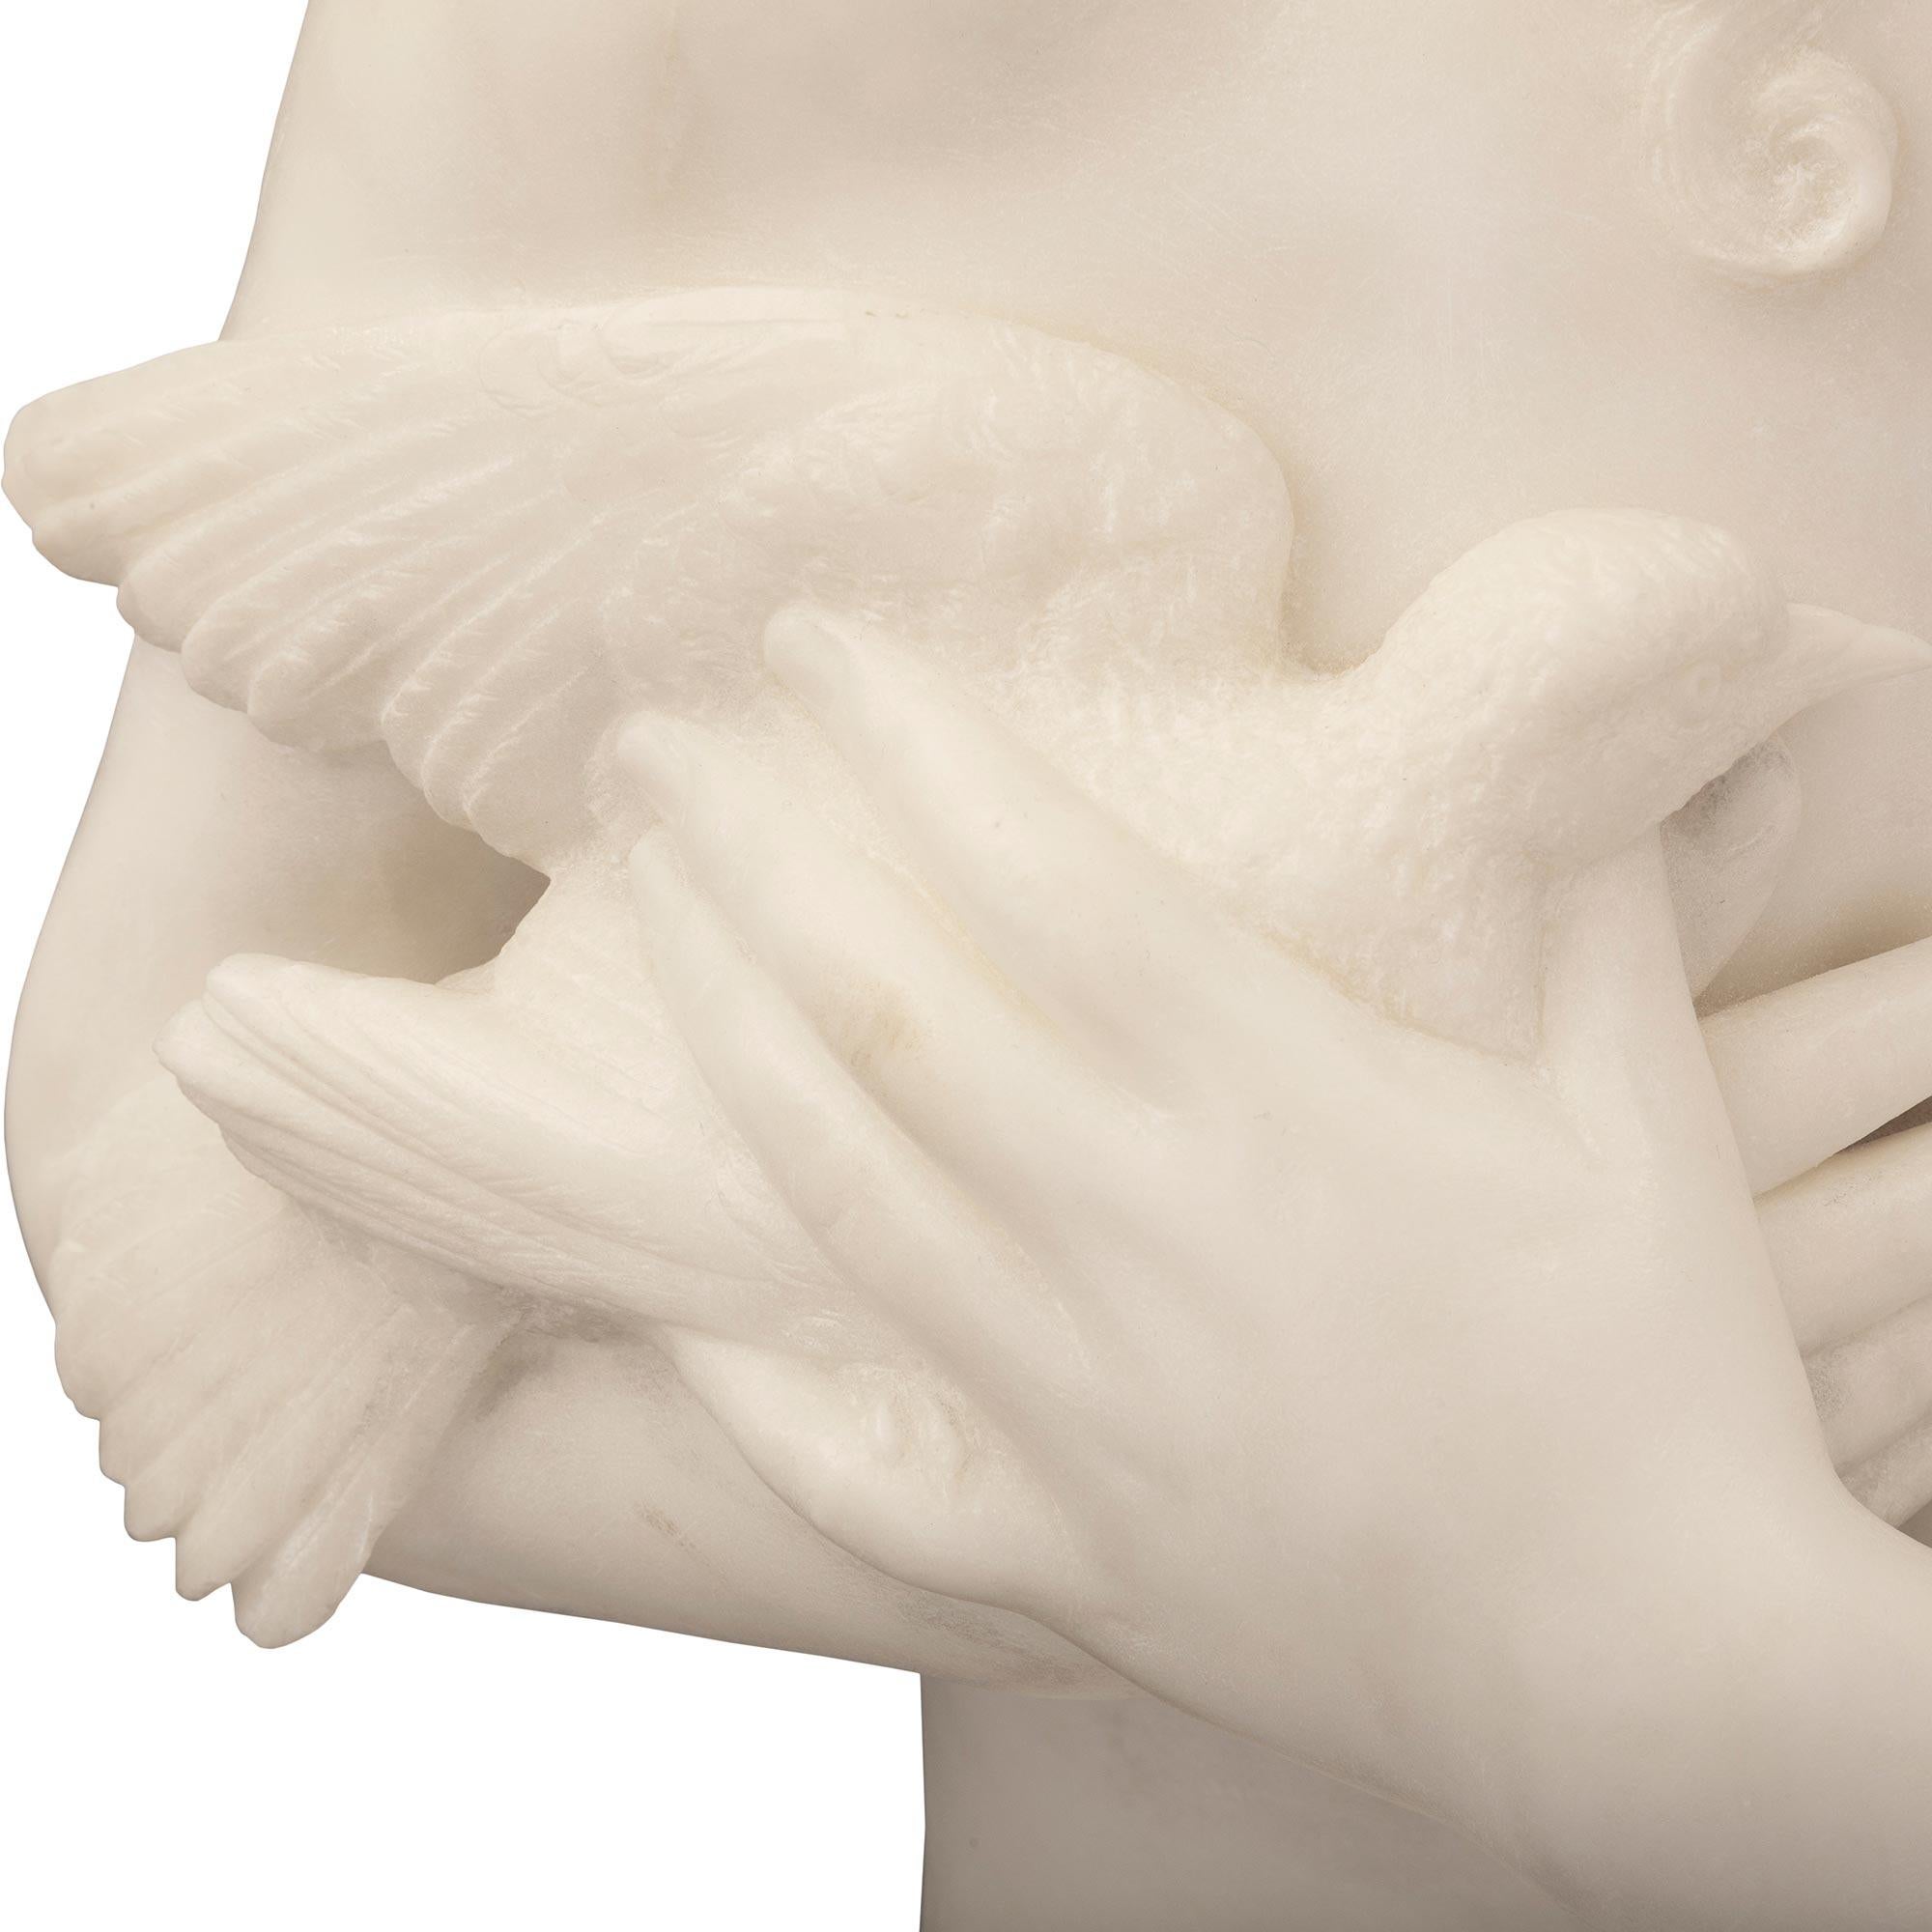 Italian 19th Century White Carrara Marble Statue on Its Original Pedestal For Sale 4